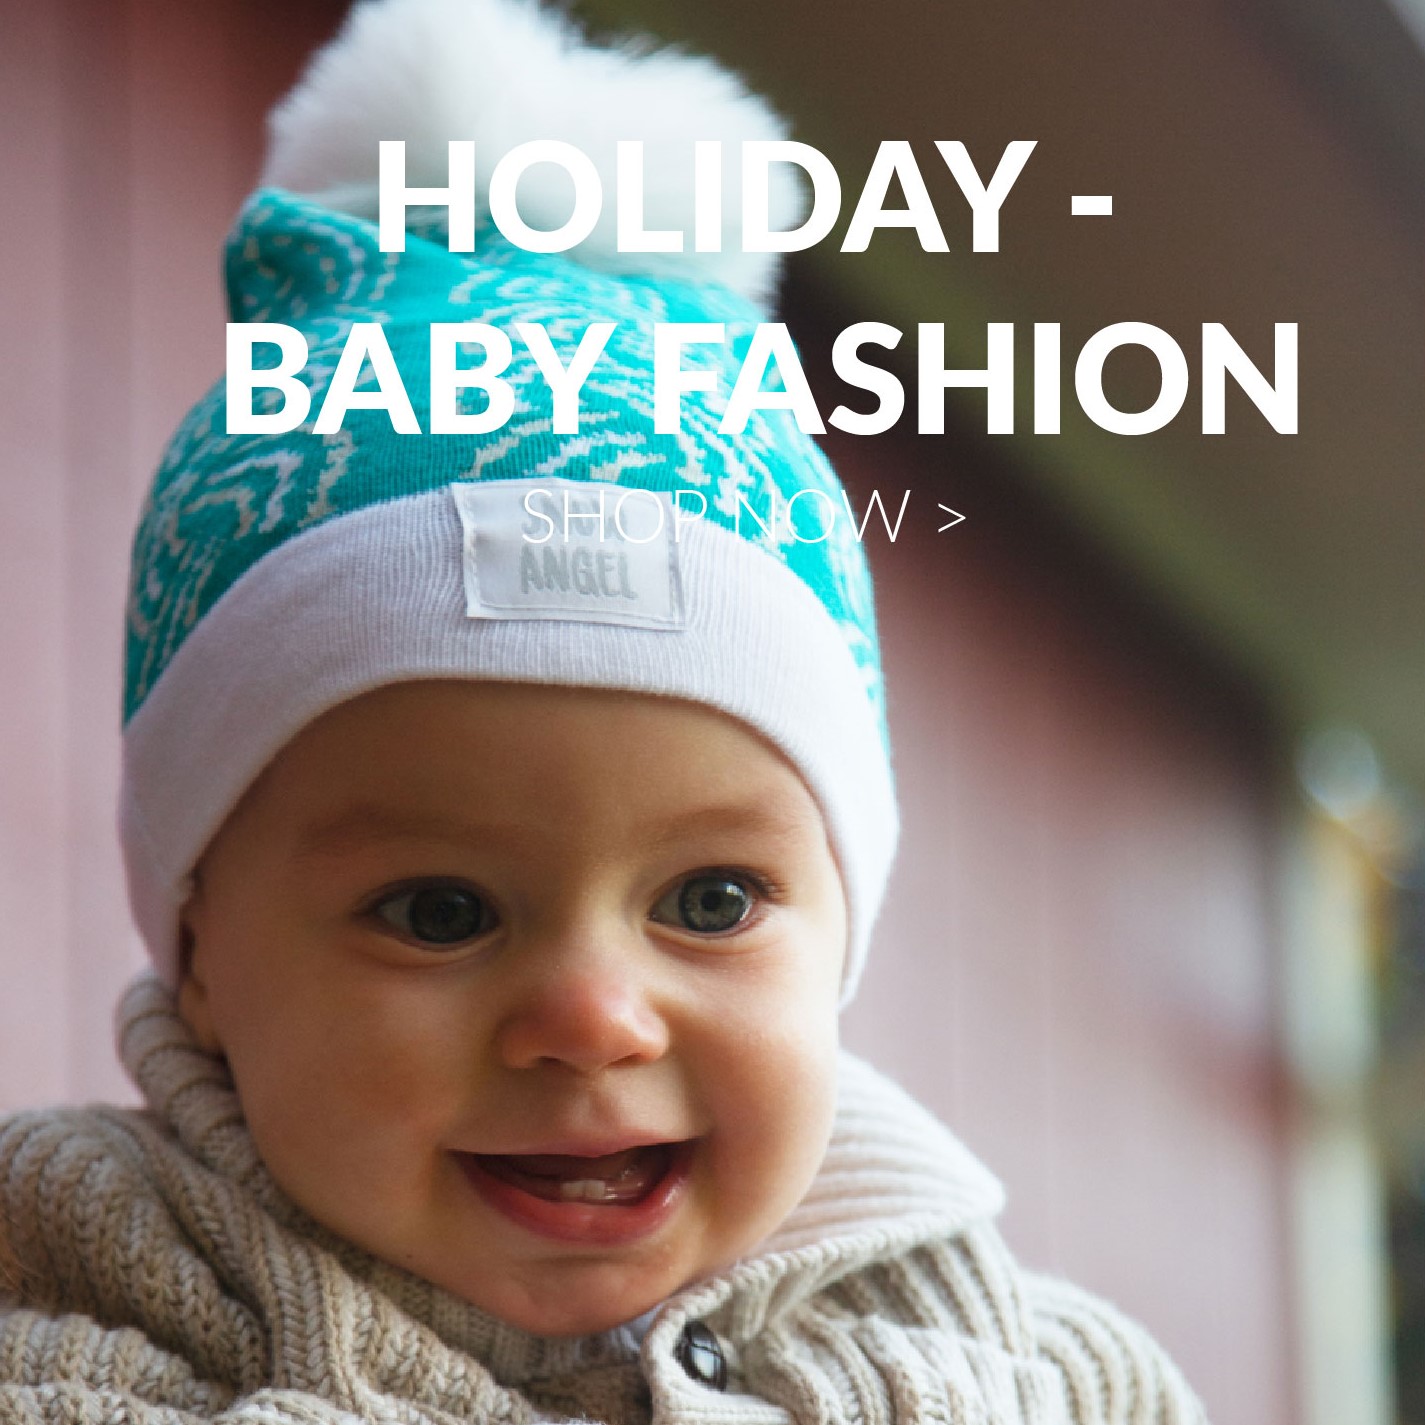 Holiday - Baby Fashion